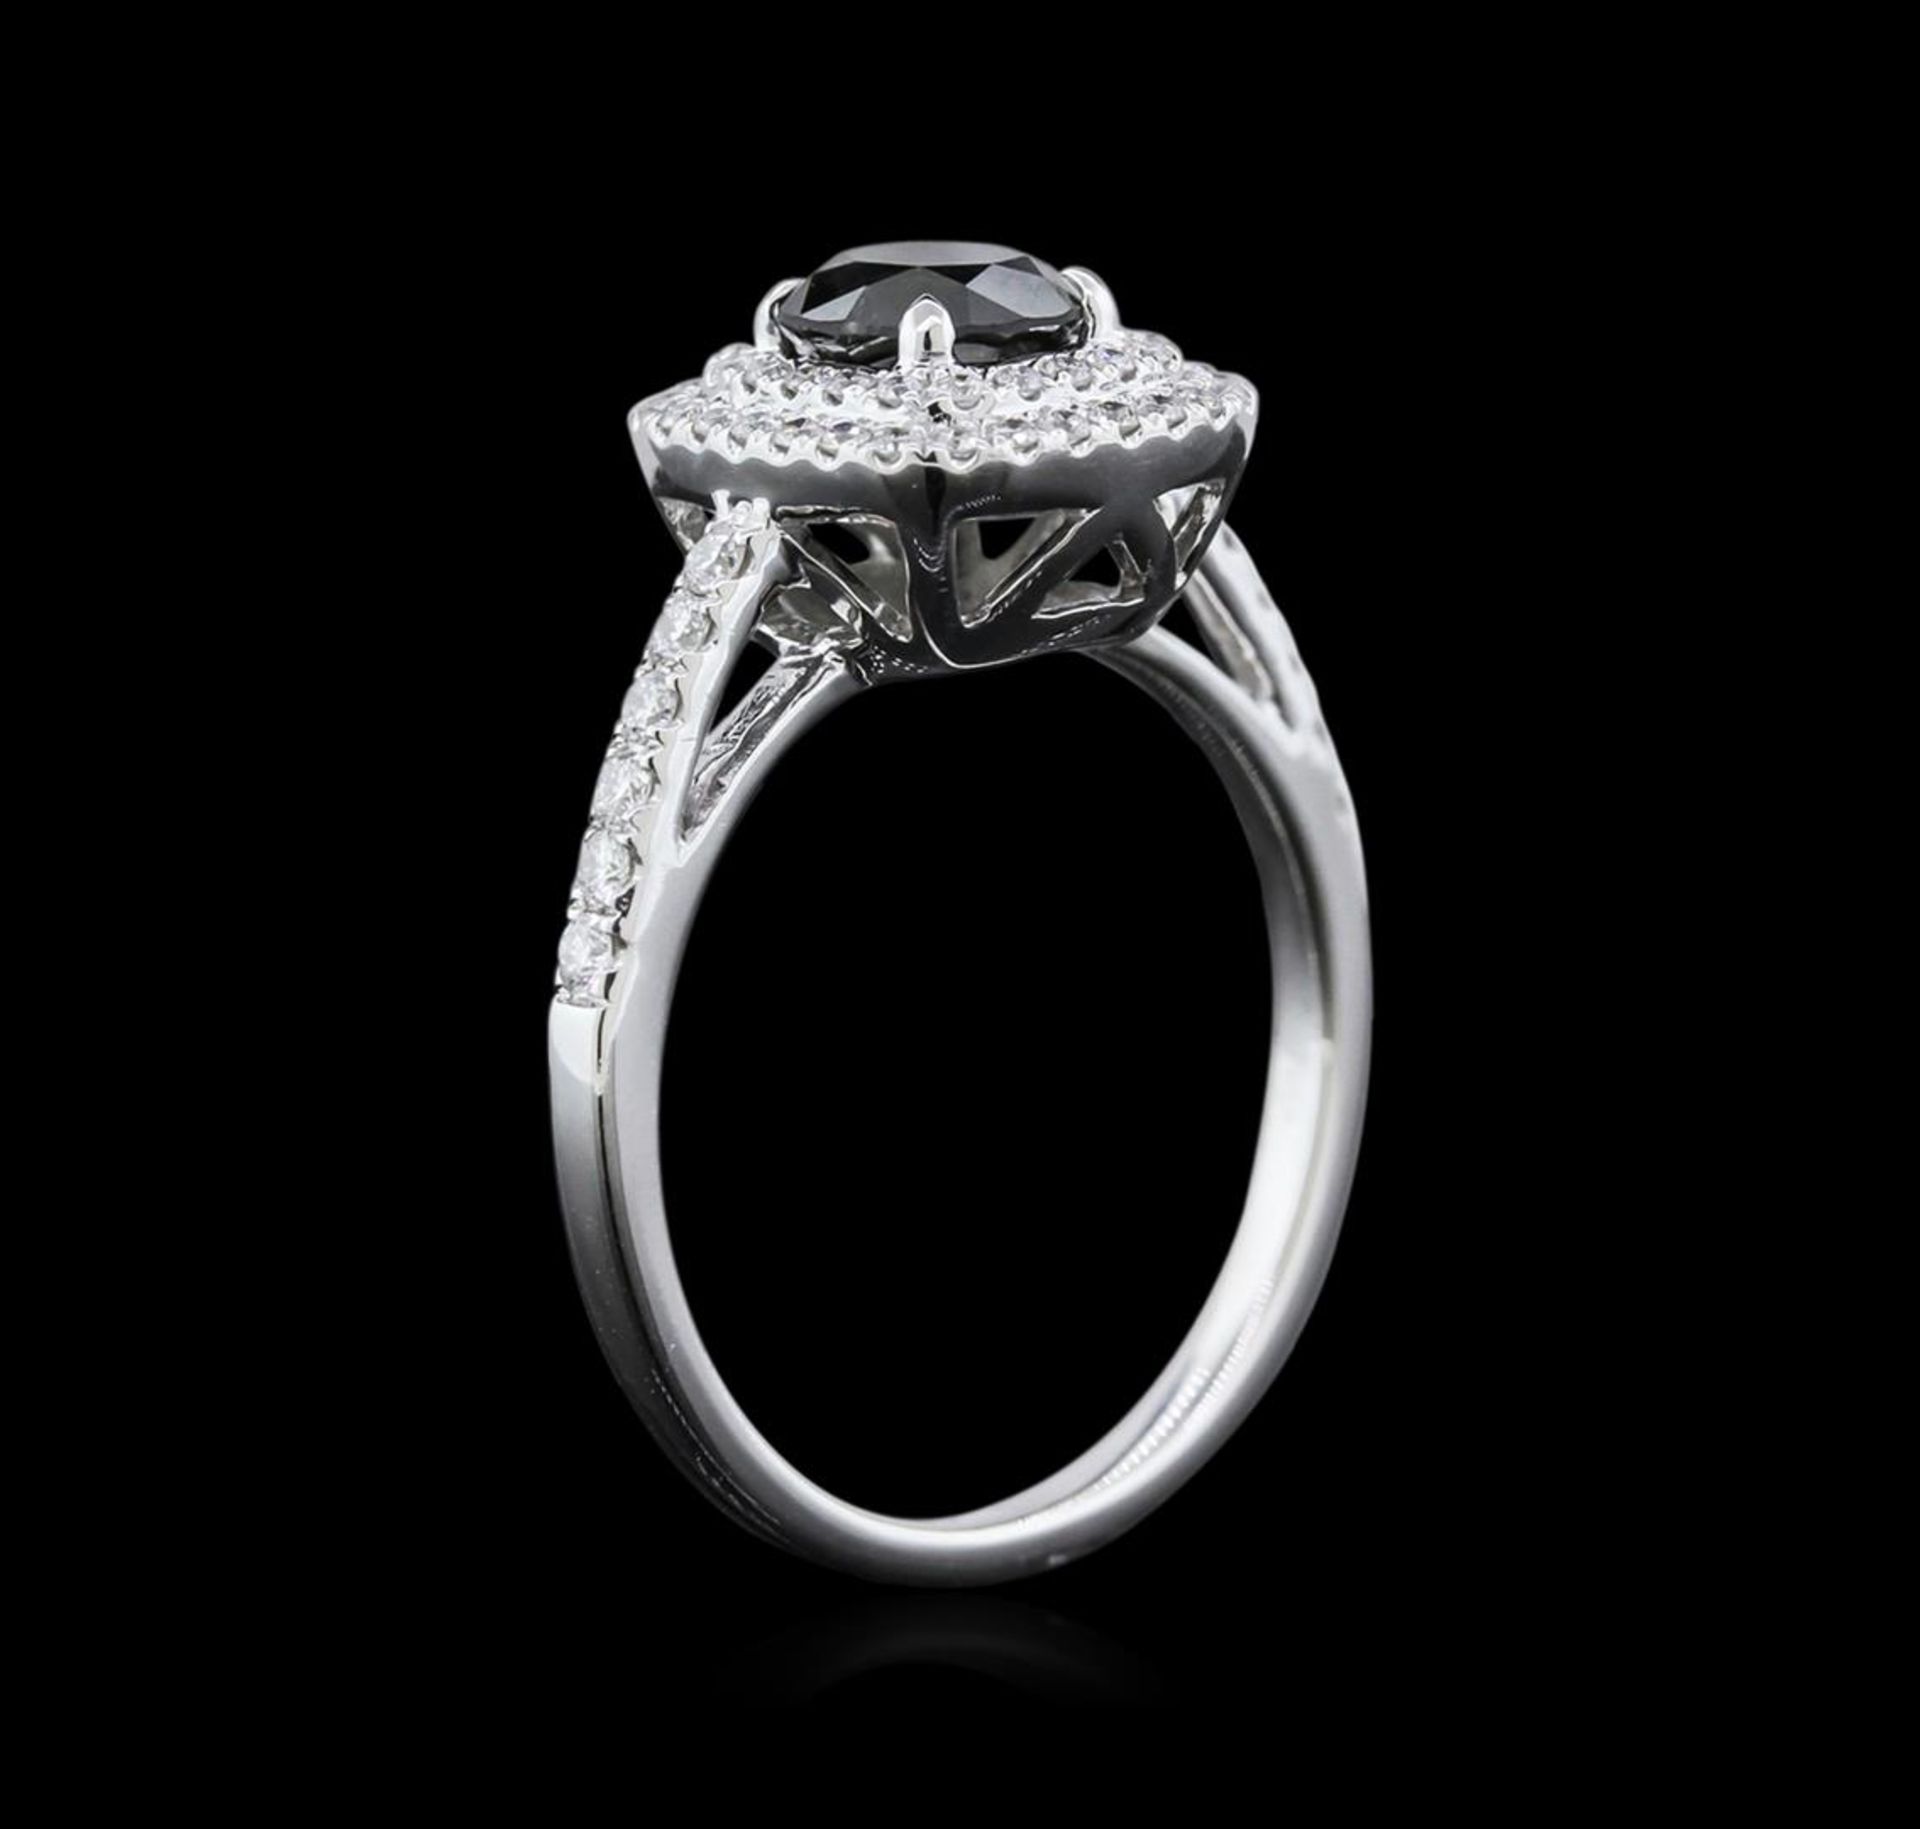 1.23 ctw Black Diamond Ring - 14KT White Gold - Image 3 of 4